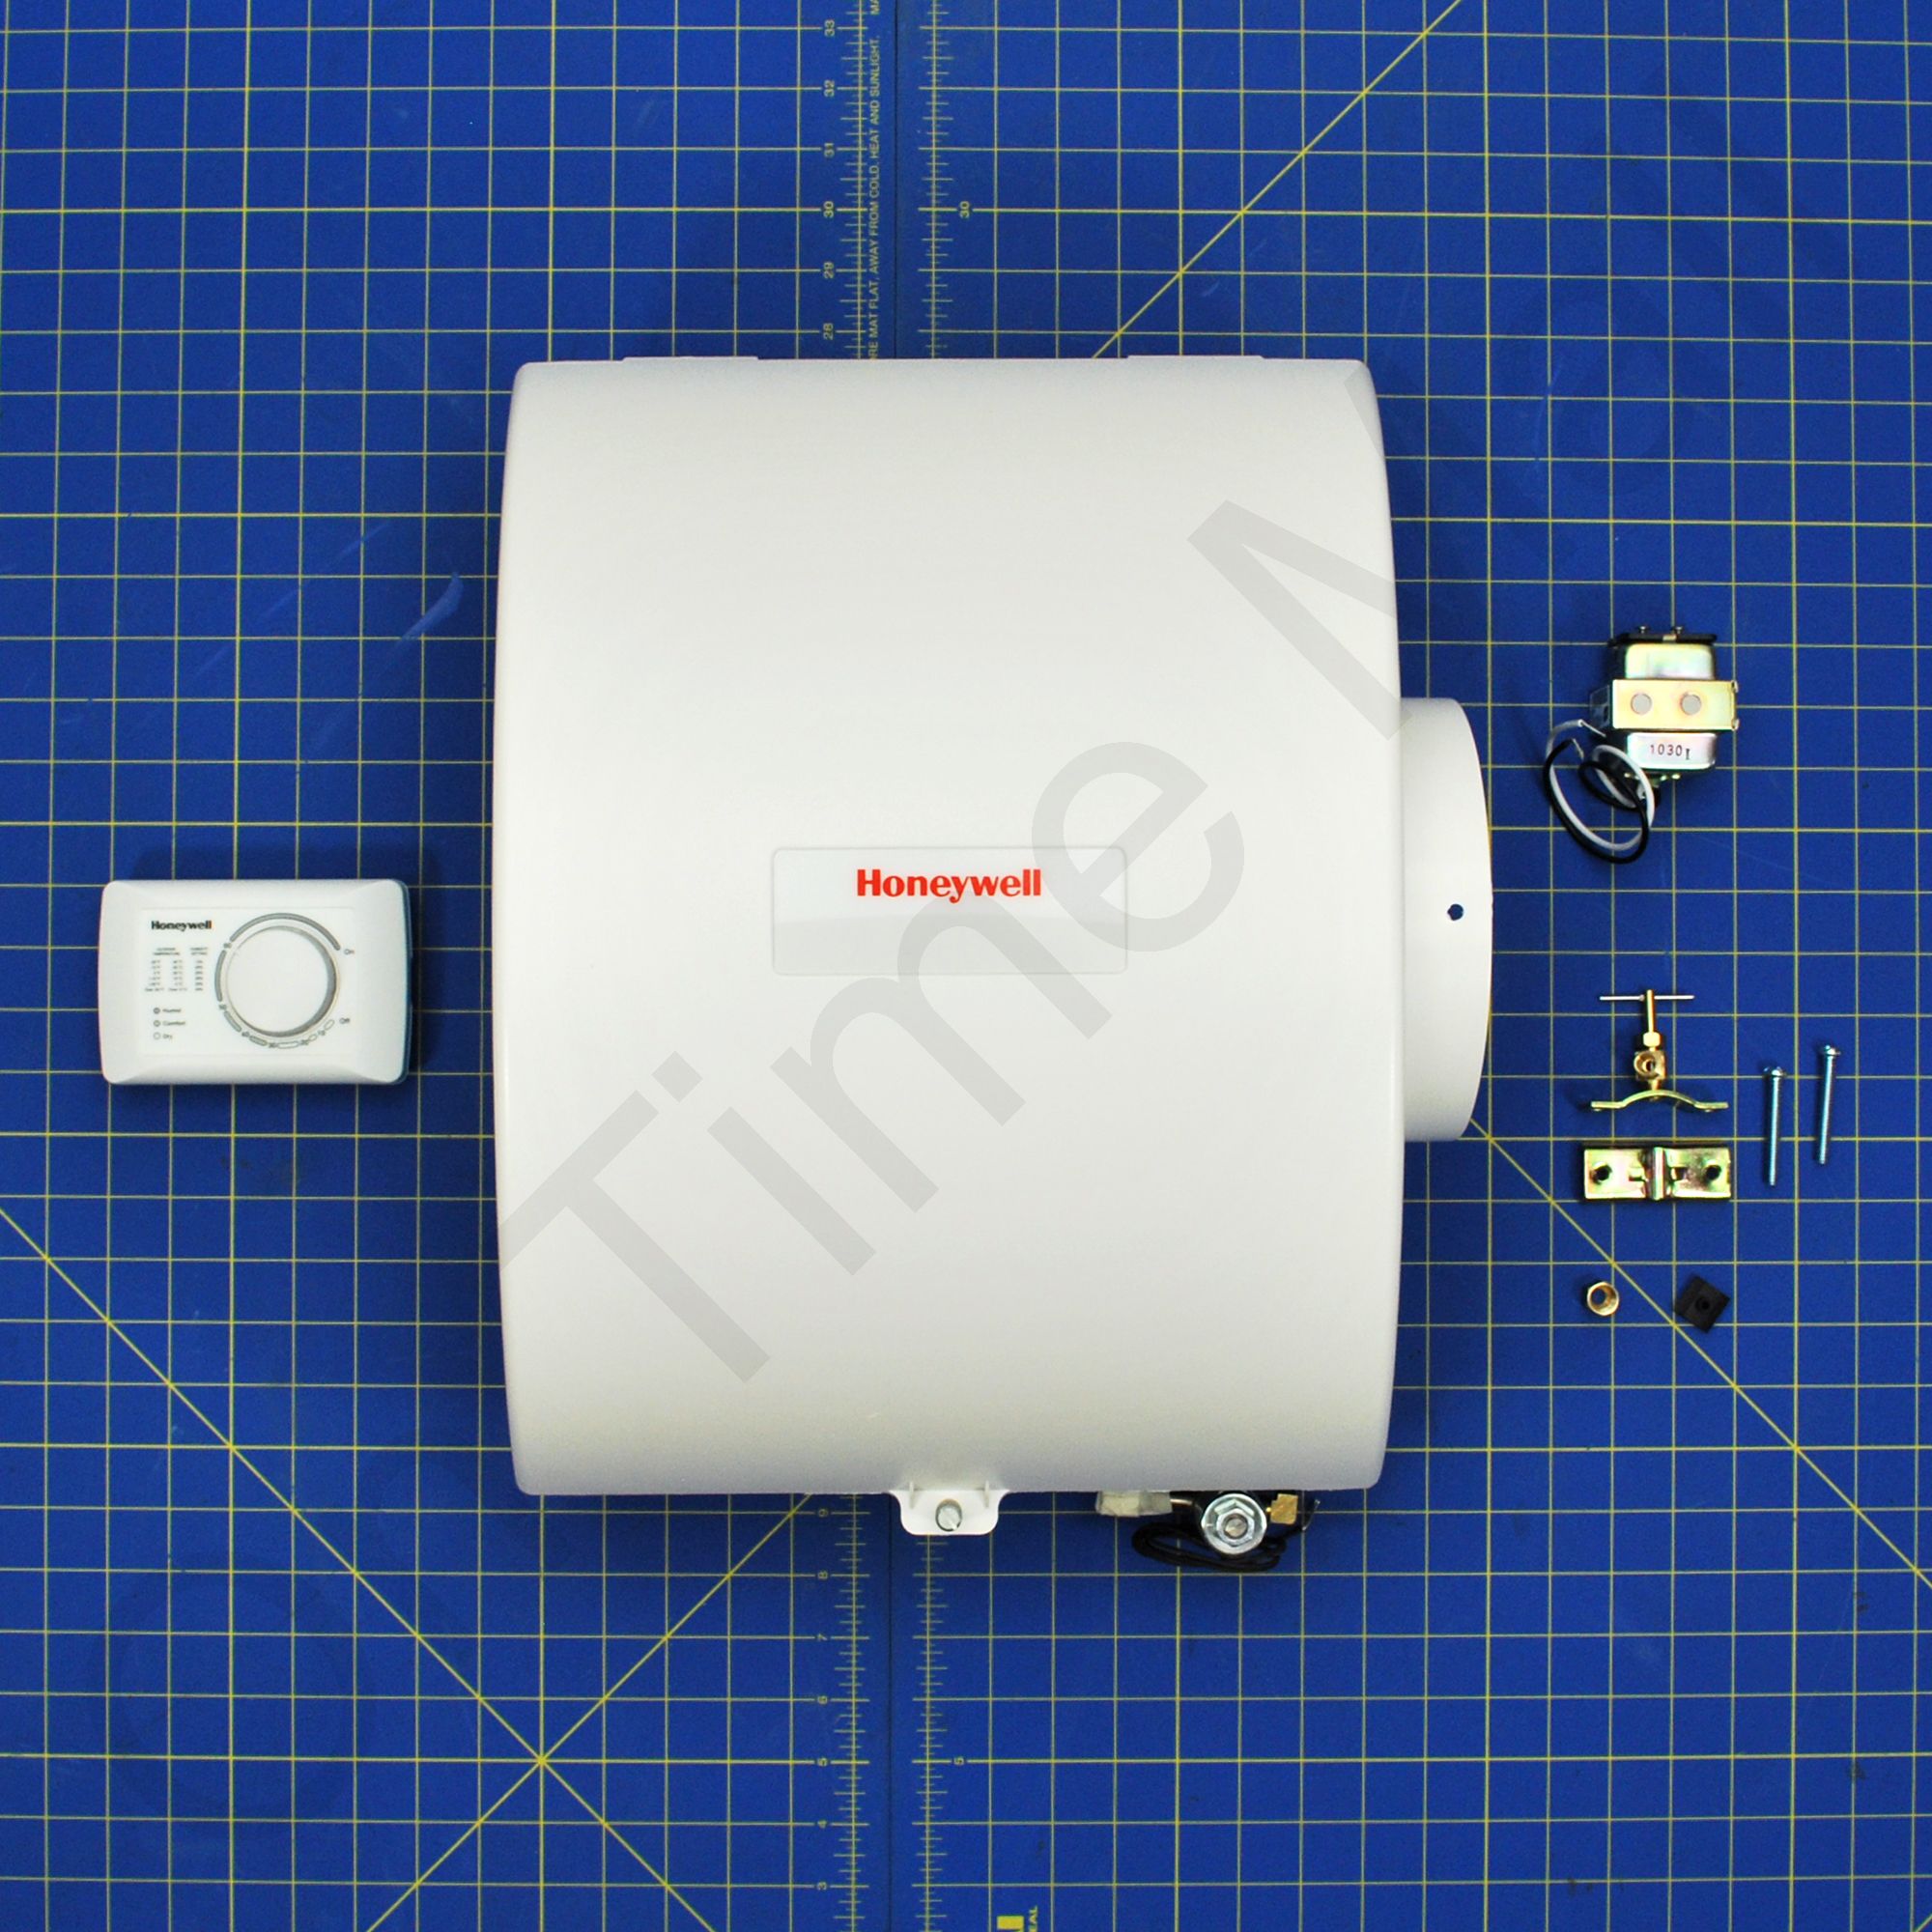 HE365H8908 - Honeywell HE365H8908 - Powered Humidifier with Humidistat